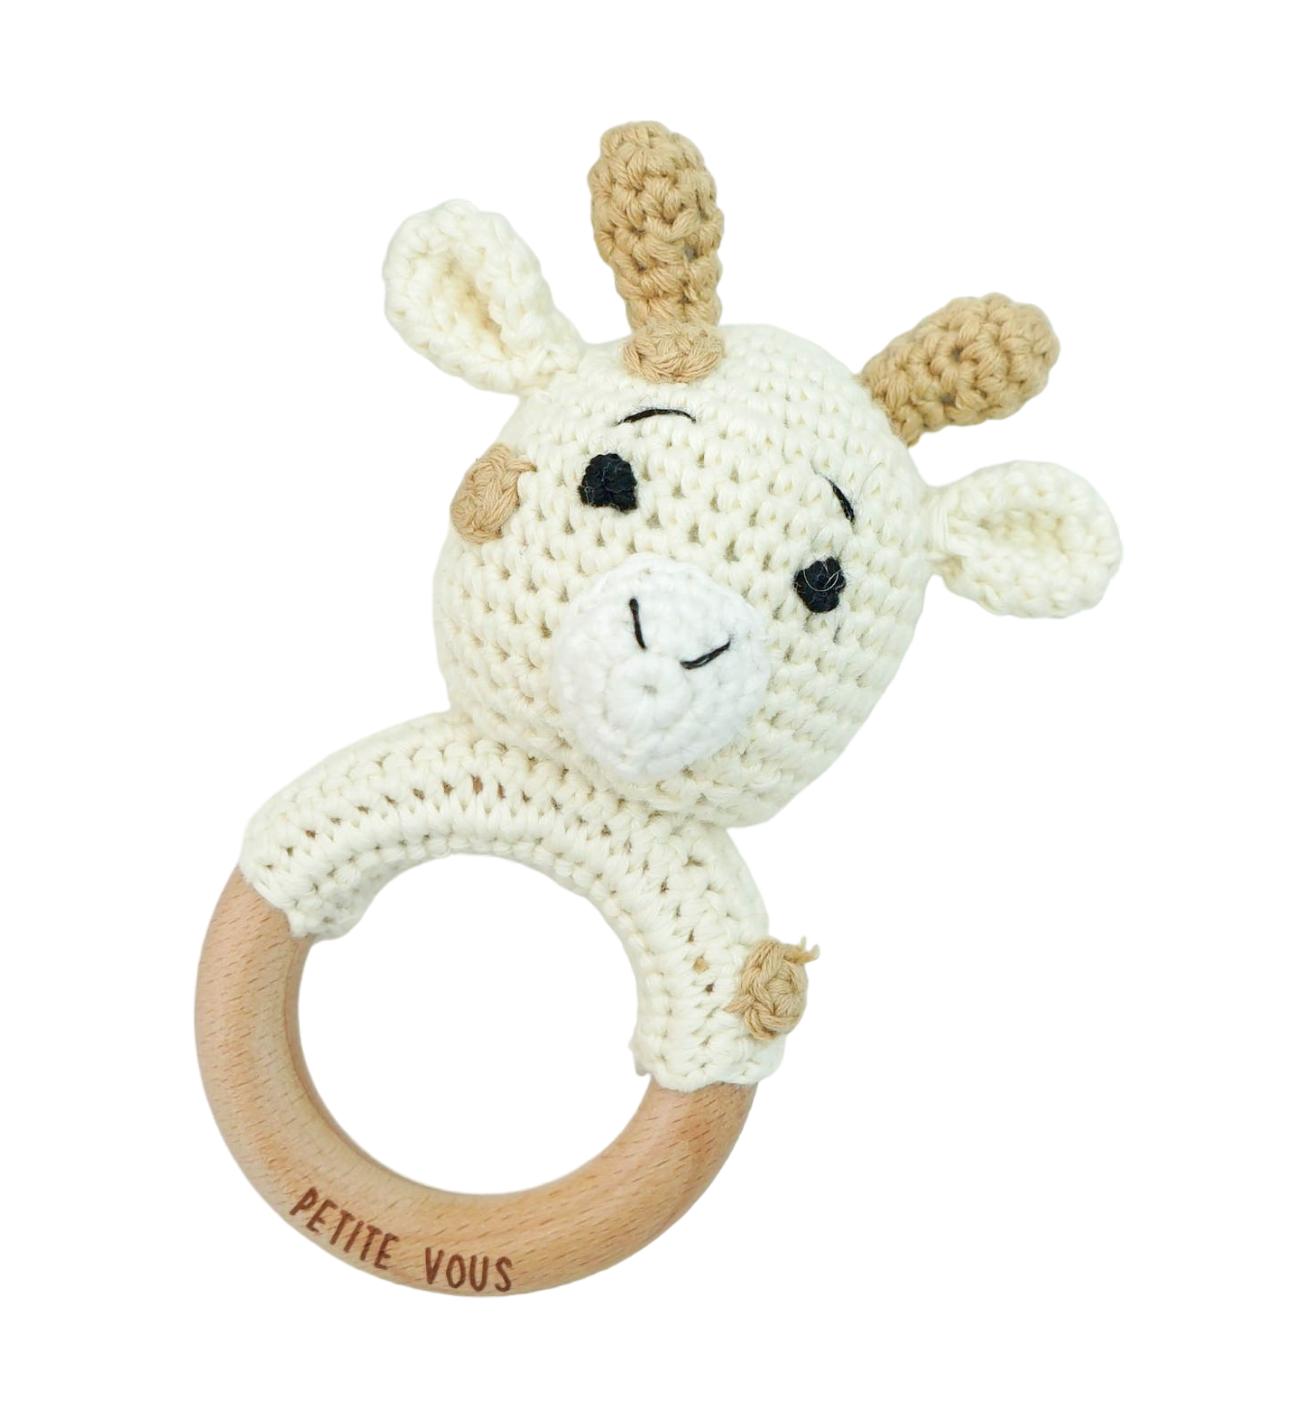 100% Cotton Crochet Ring Rattle - Percy Giraffe